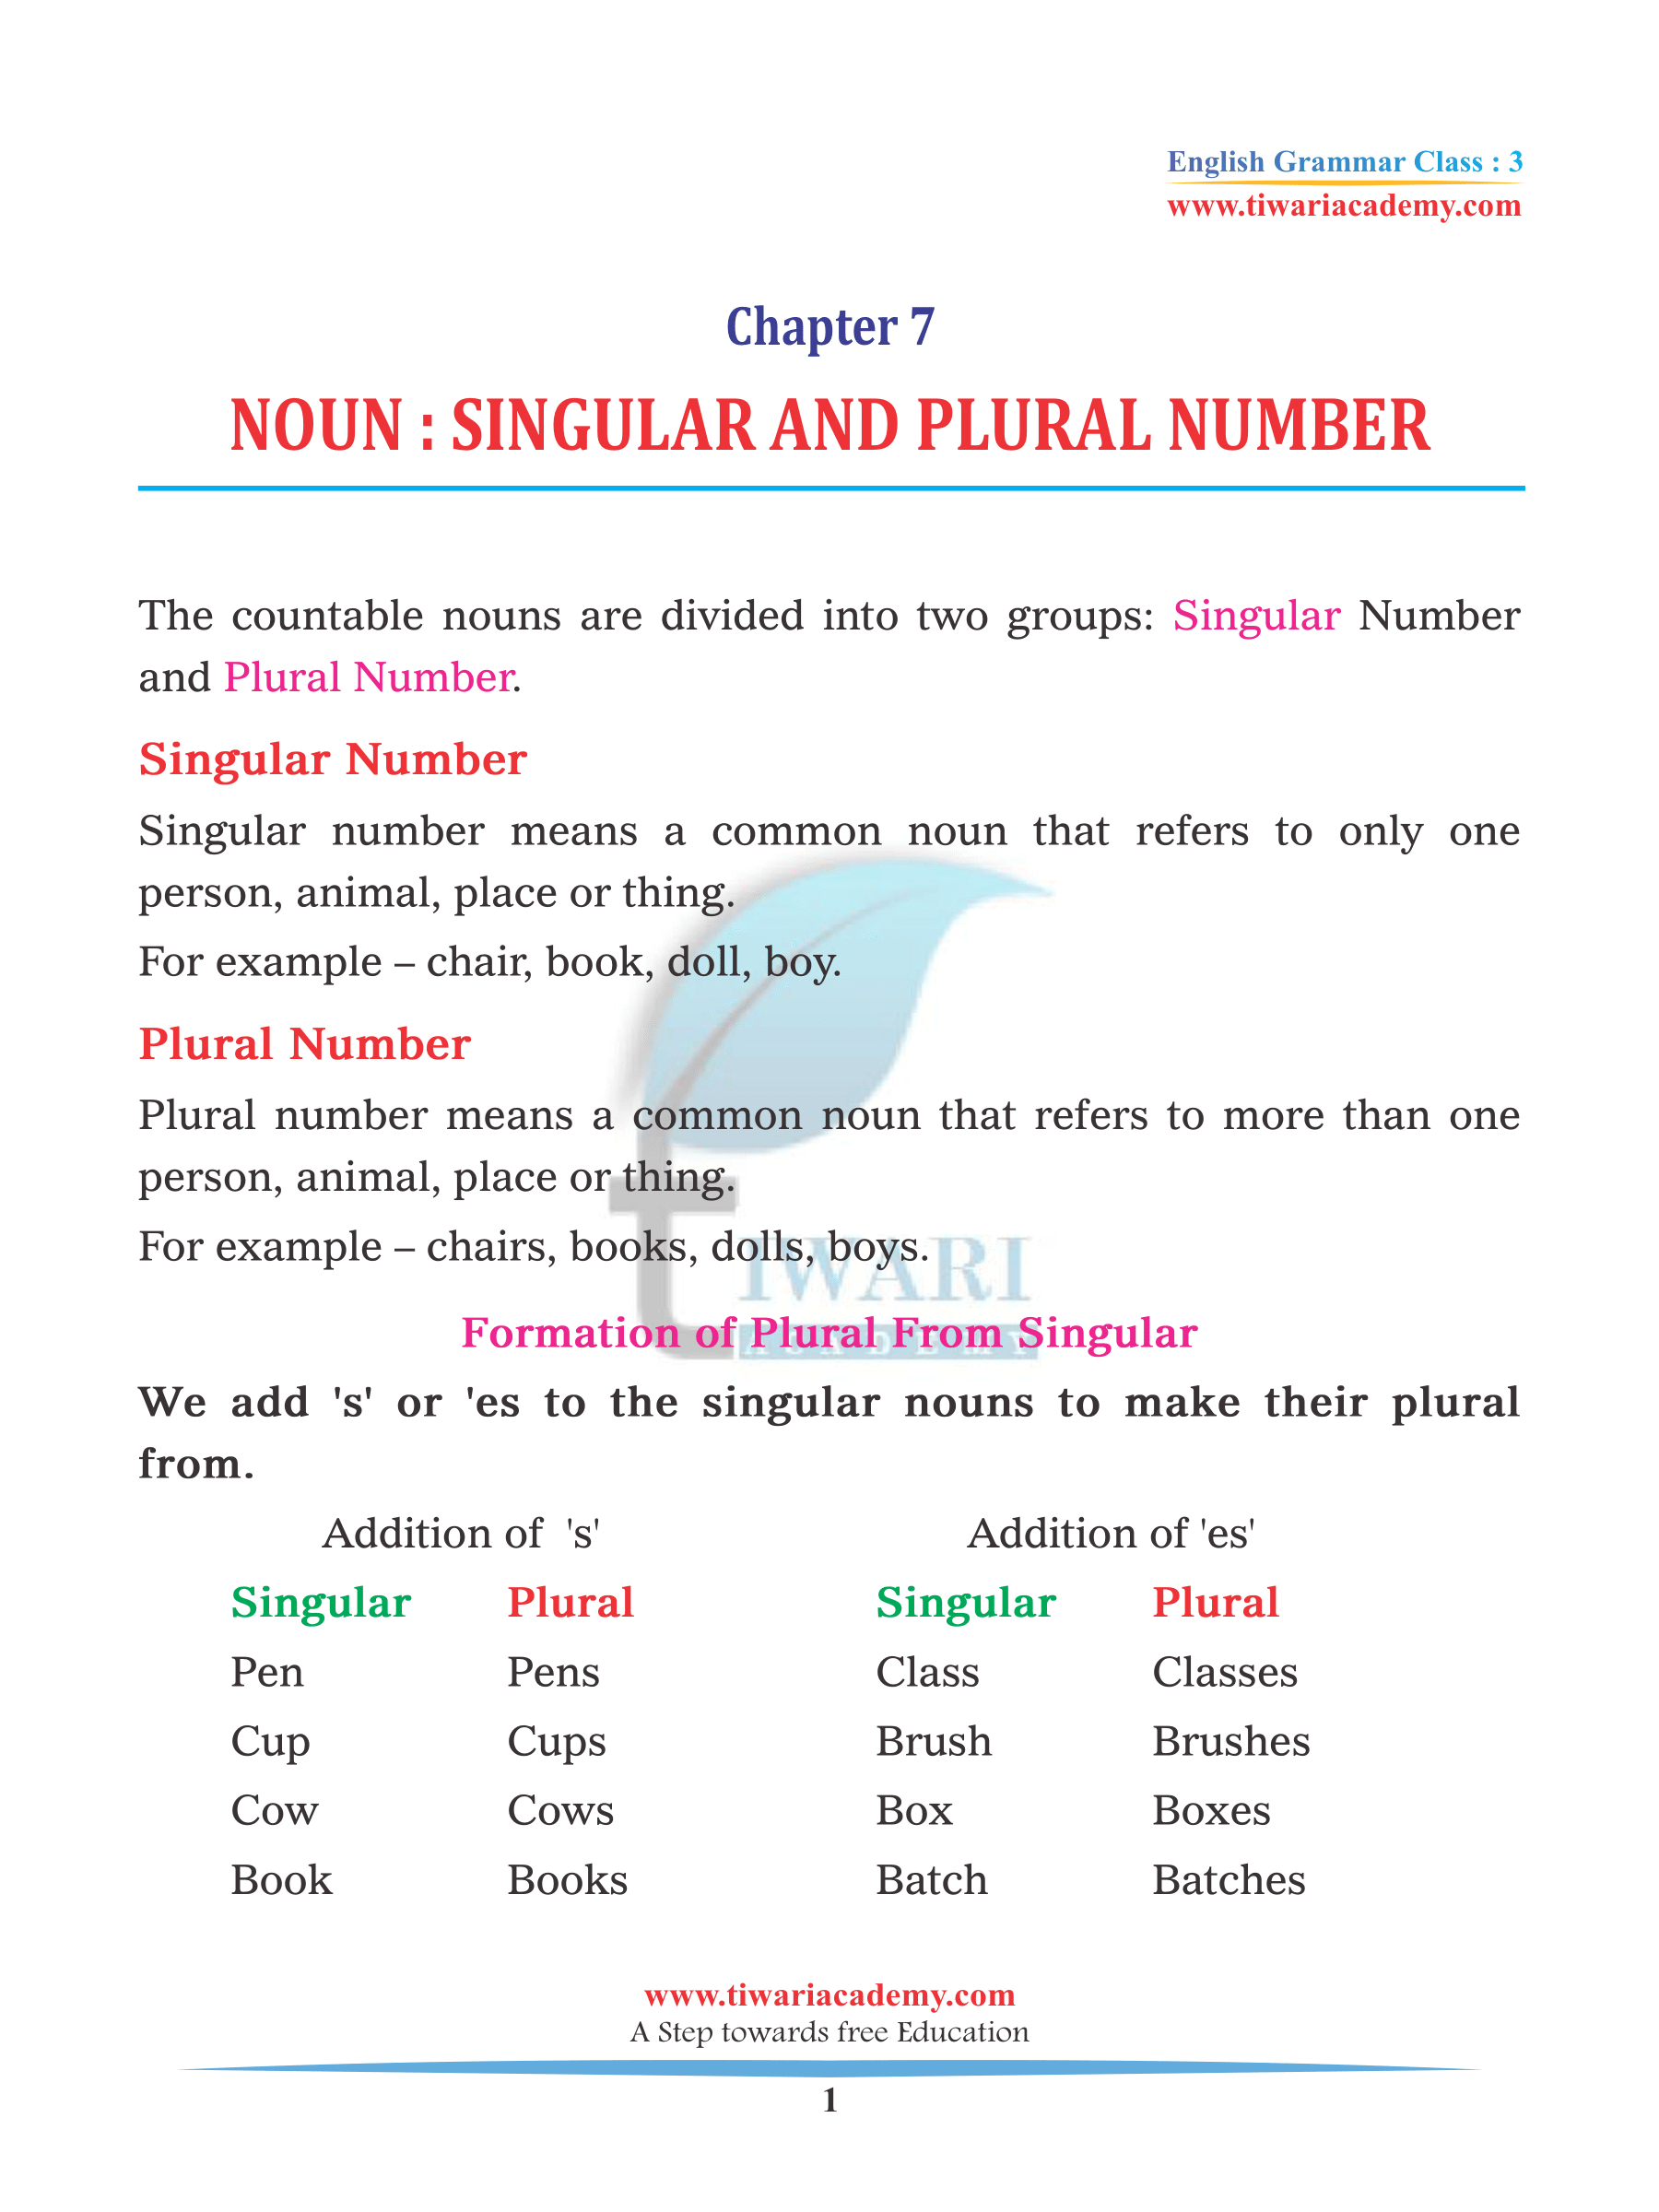 Class 3 English Grammar Chapter 7 Noun - Singular